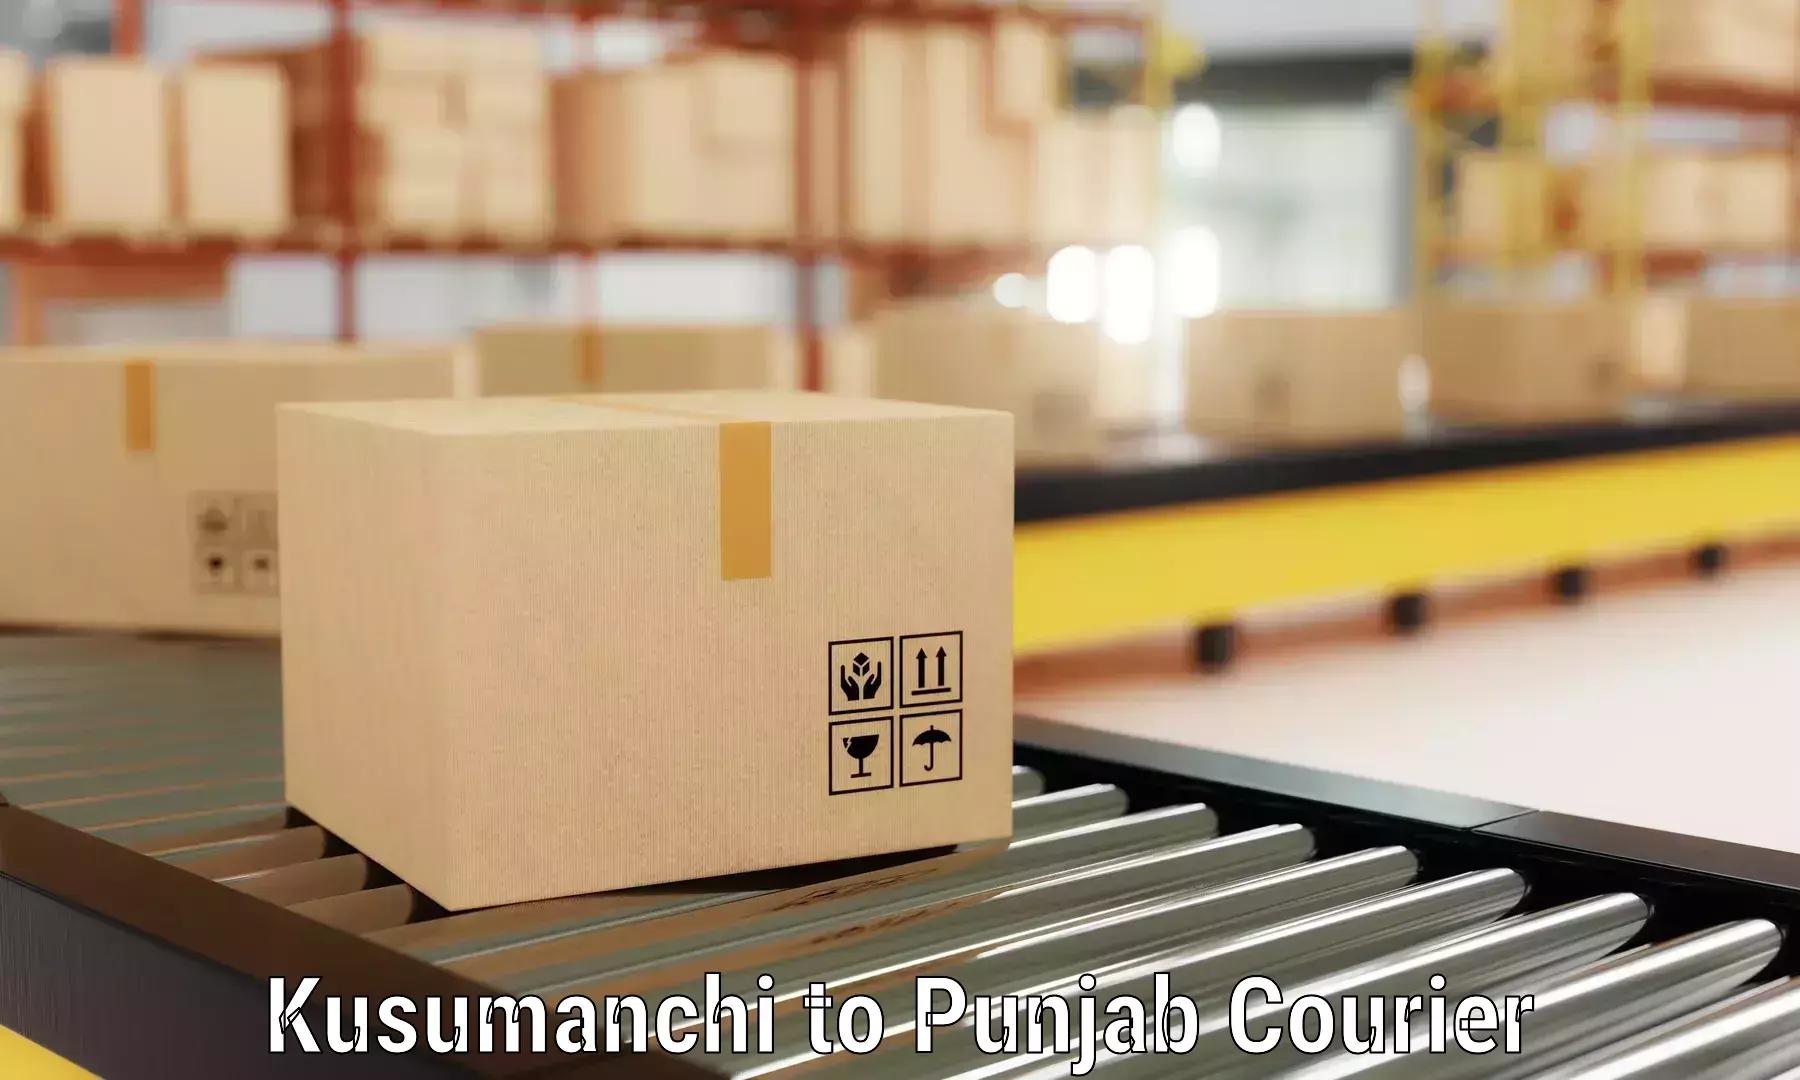 Professional moving company Kusumanchi to Punjab